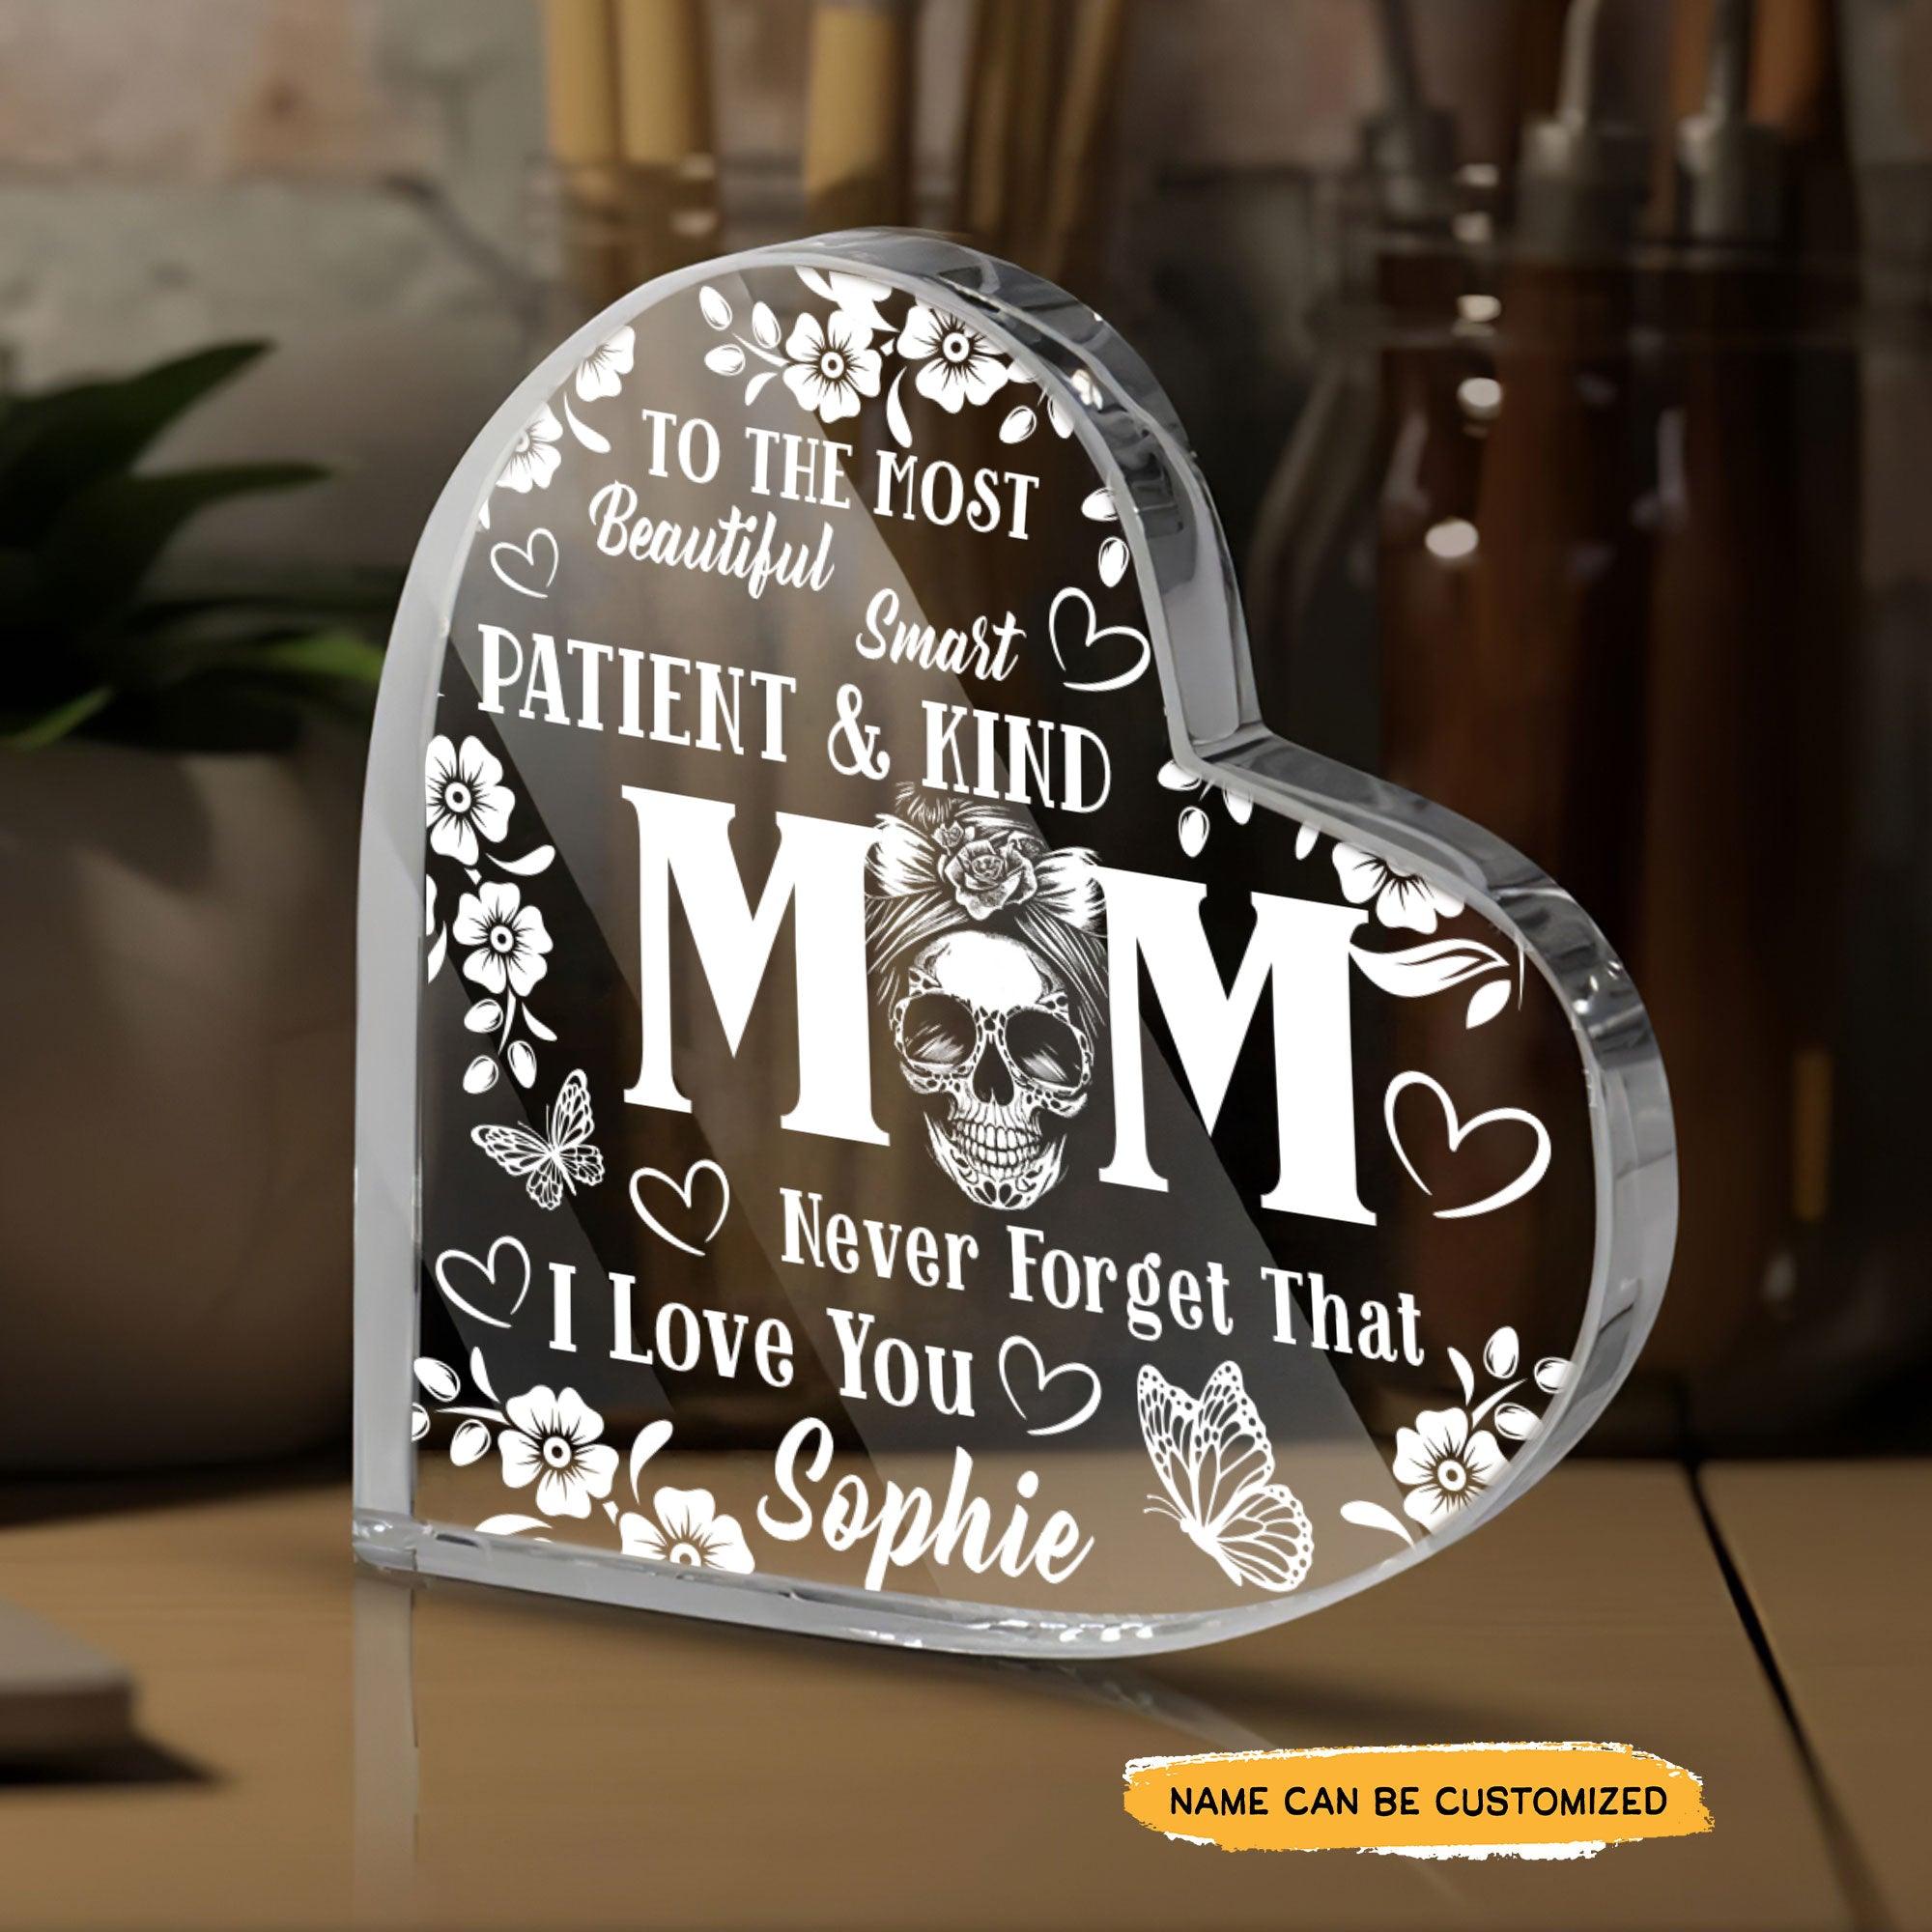 Patient & Kind Mom - Customized Skull Crystal Heart Anniversary Gifts - Wonder Skull